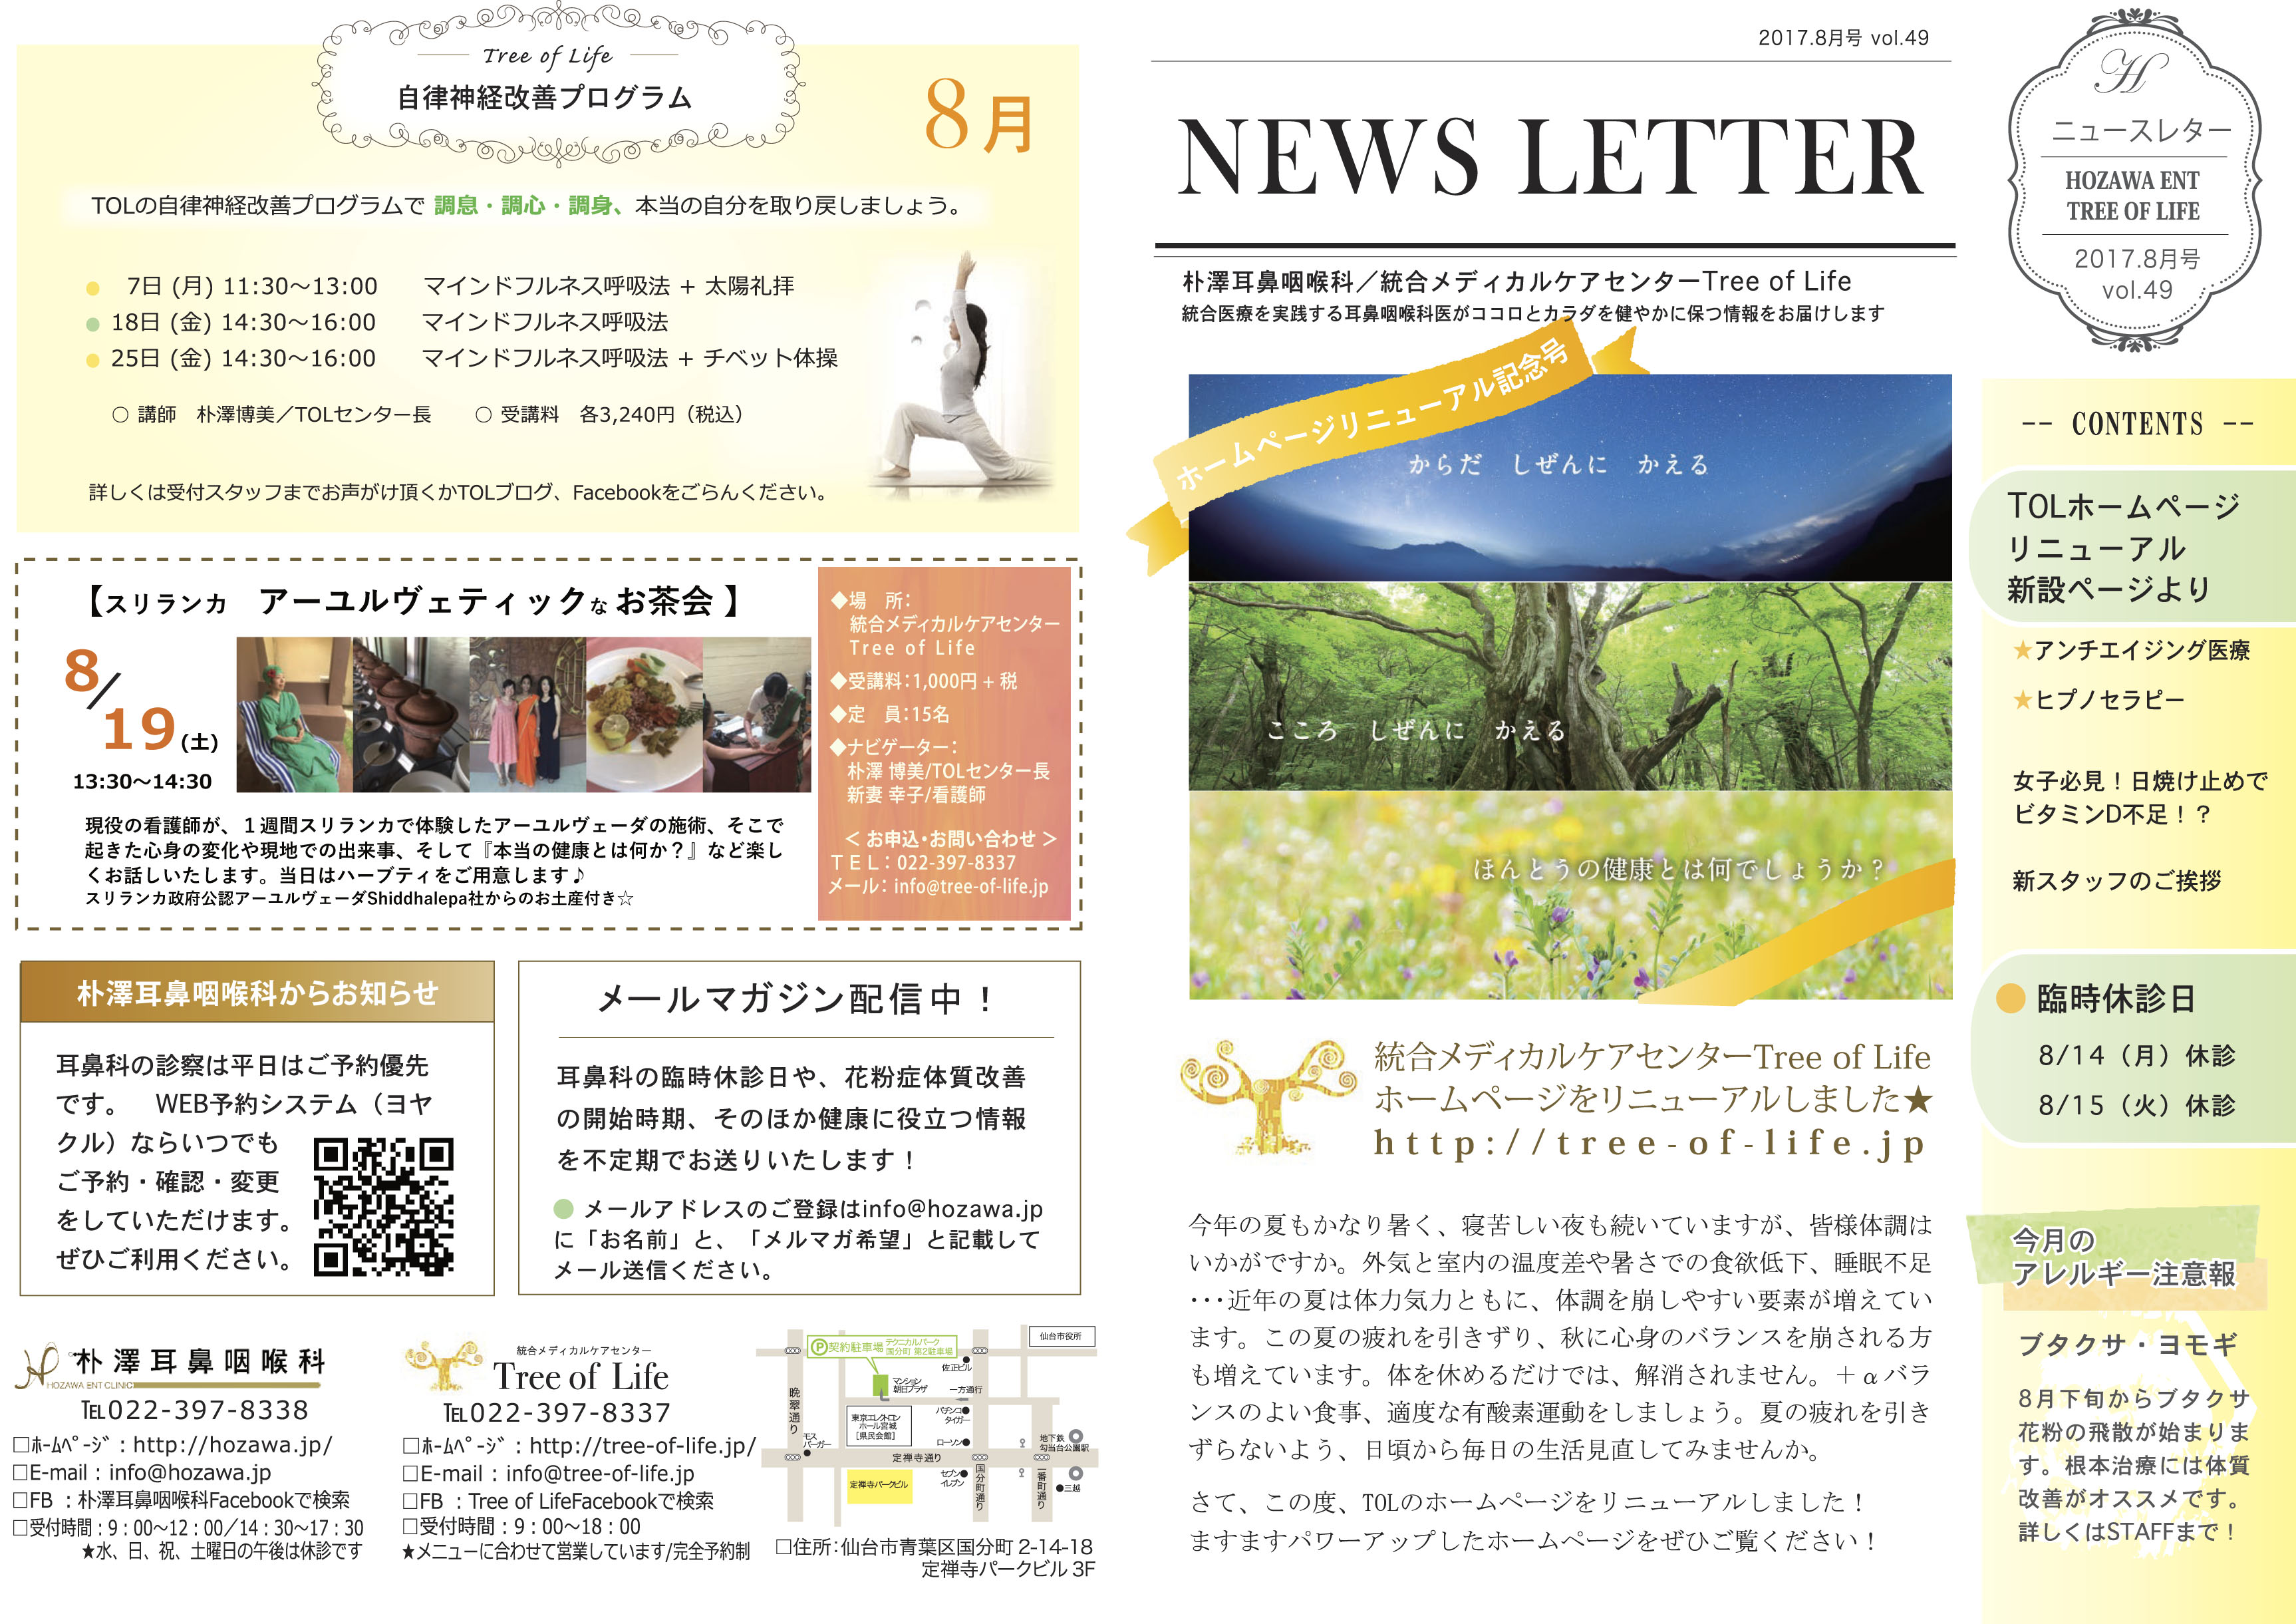 http://hozawa.jp/news/news_img/1707299700_01L-1.jpg